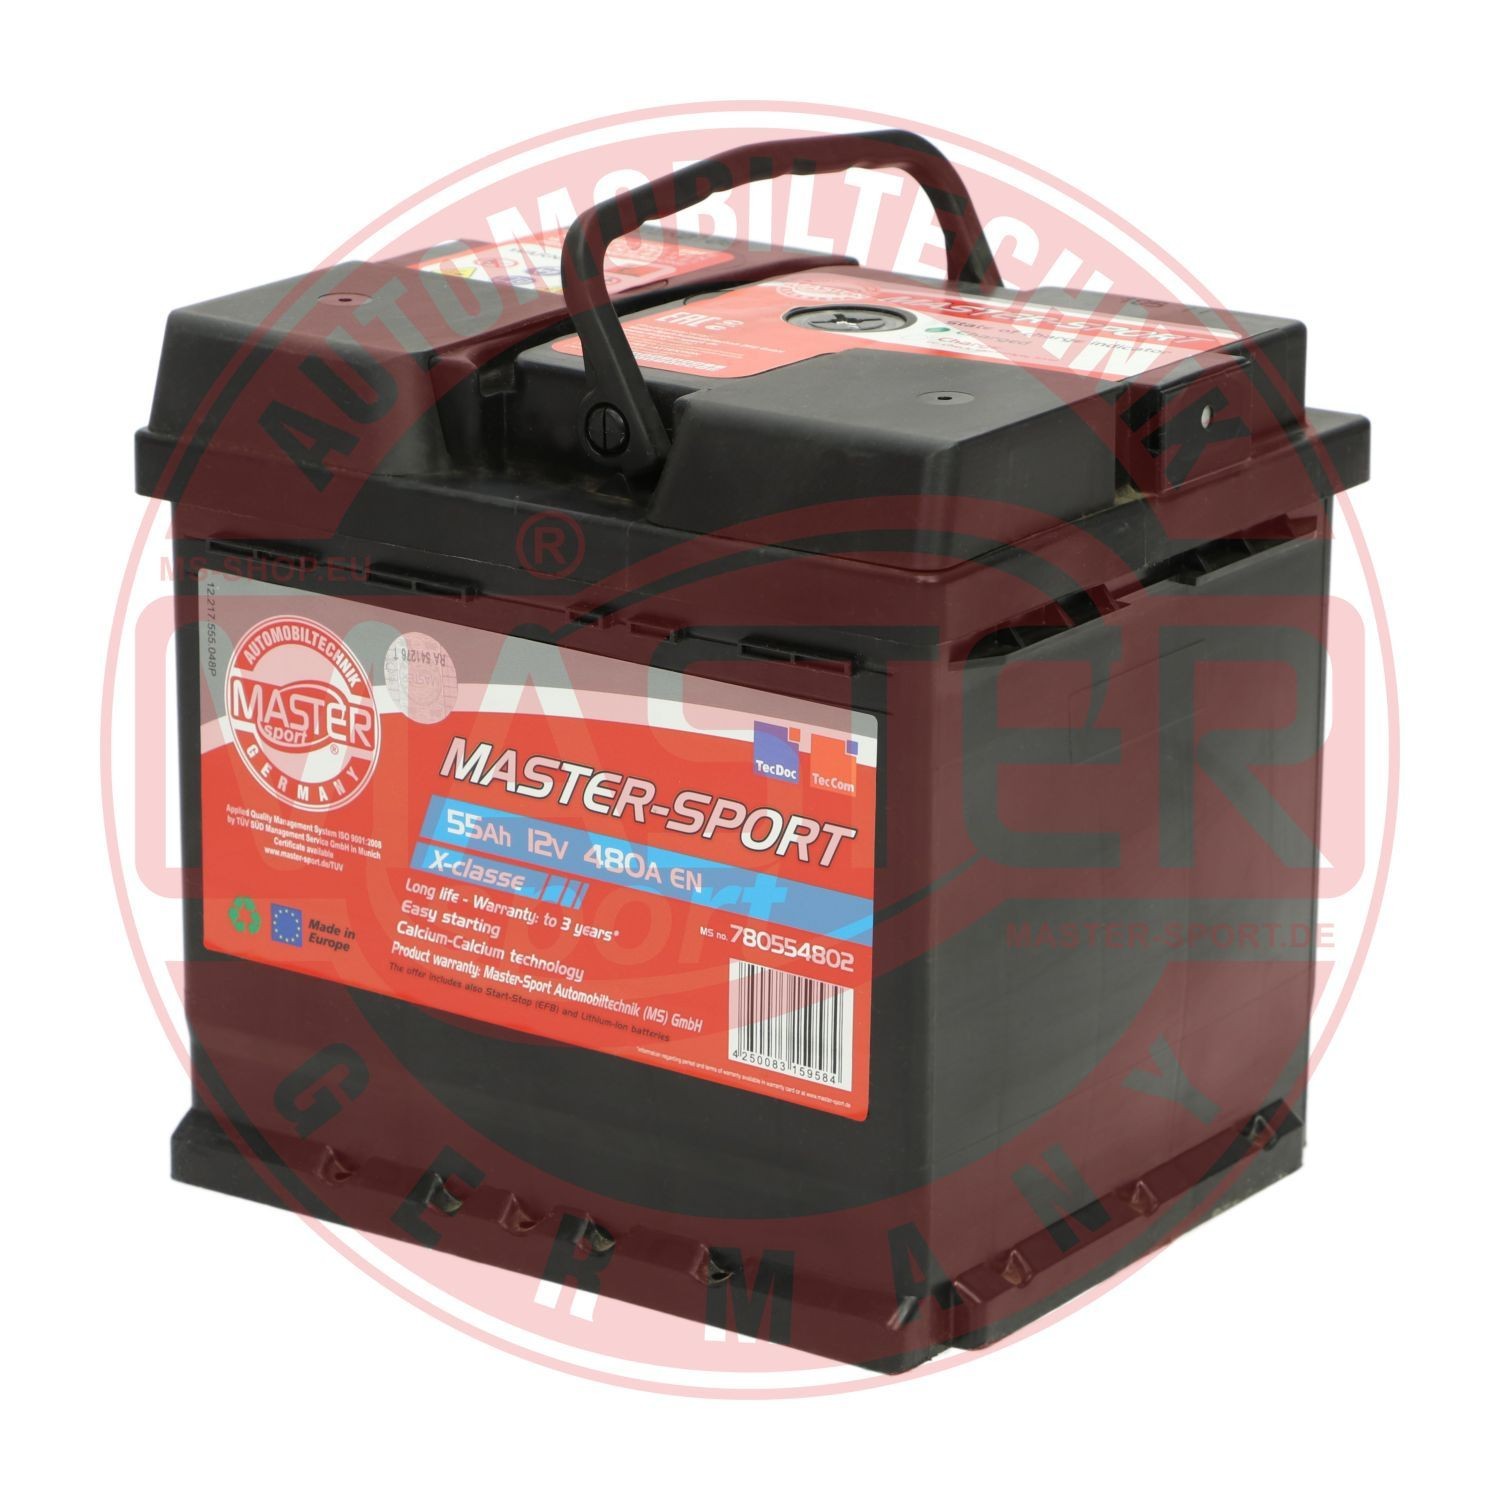 780554802 MASTER-SPORT Car battery DODGE 12V 55Ah 480A B13 L1 Lead-acid battery